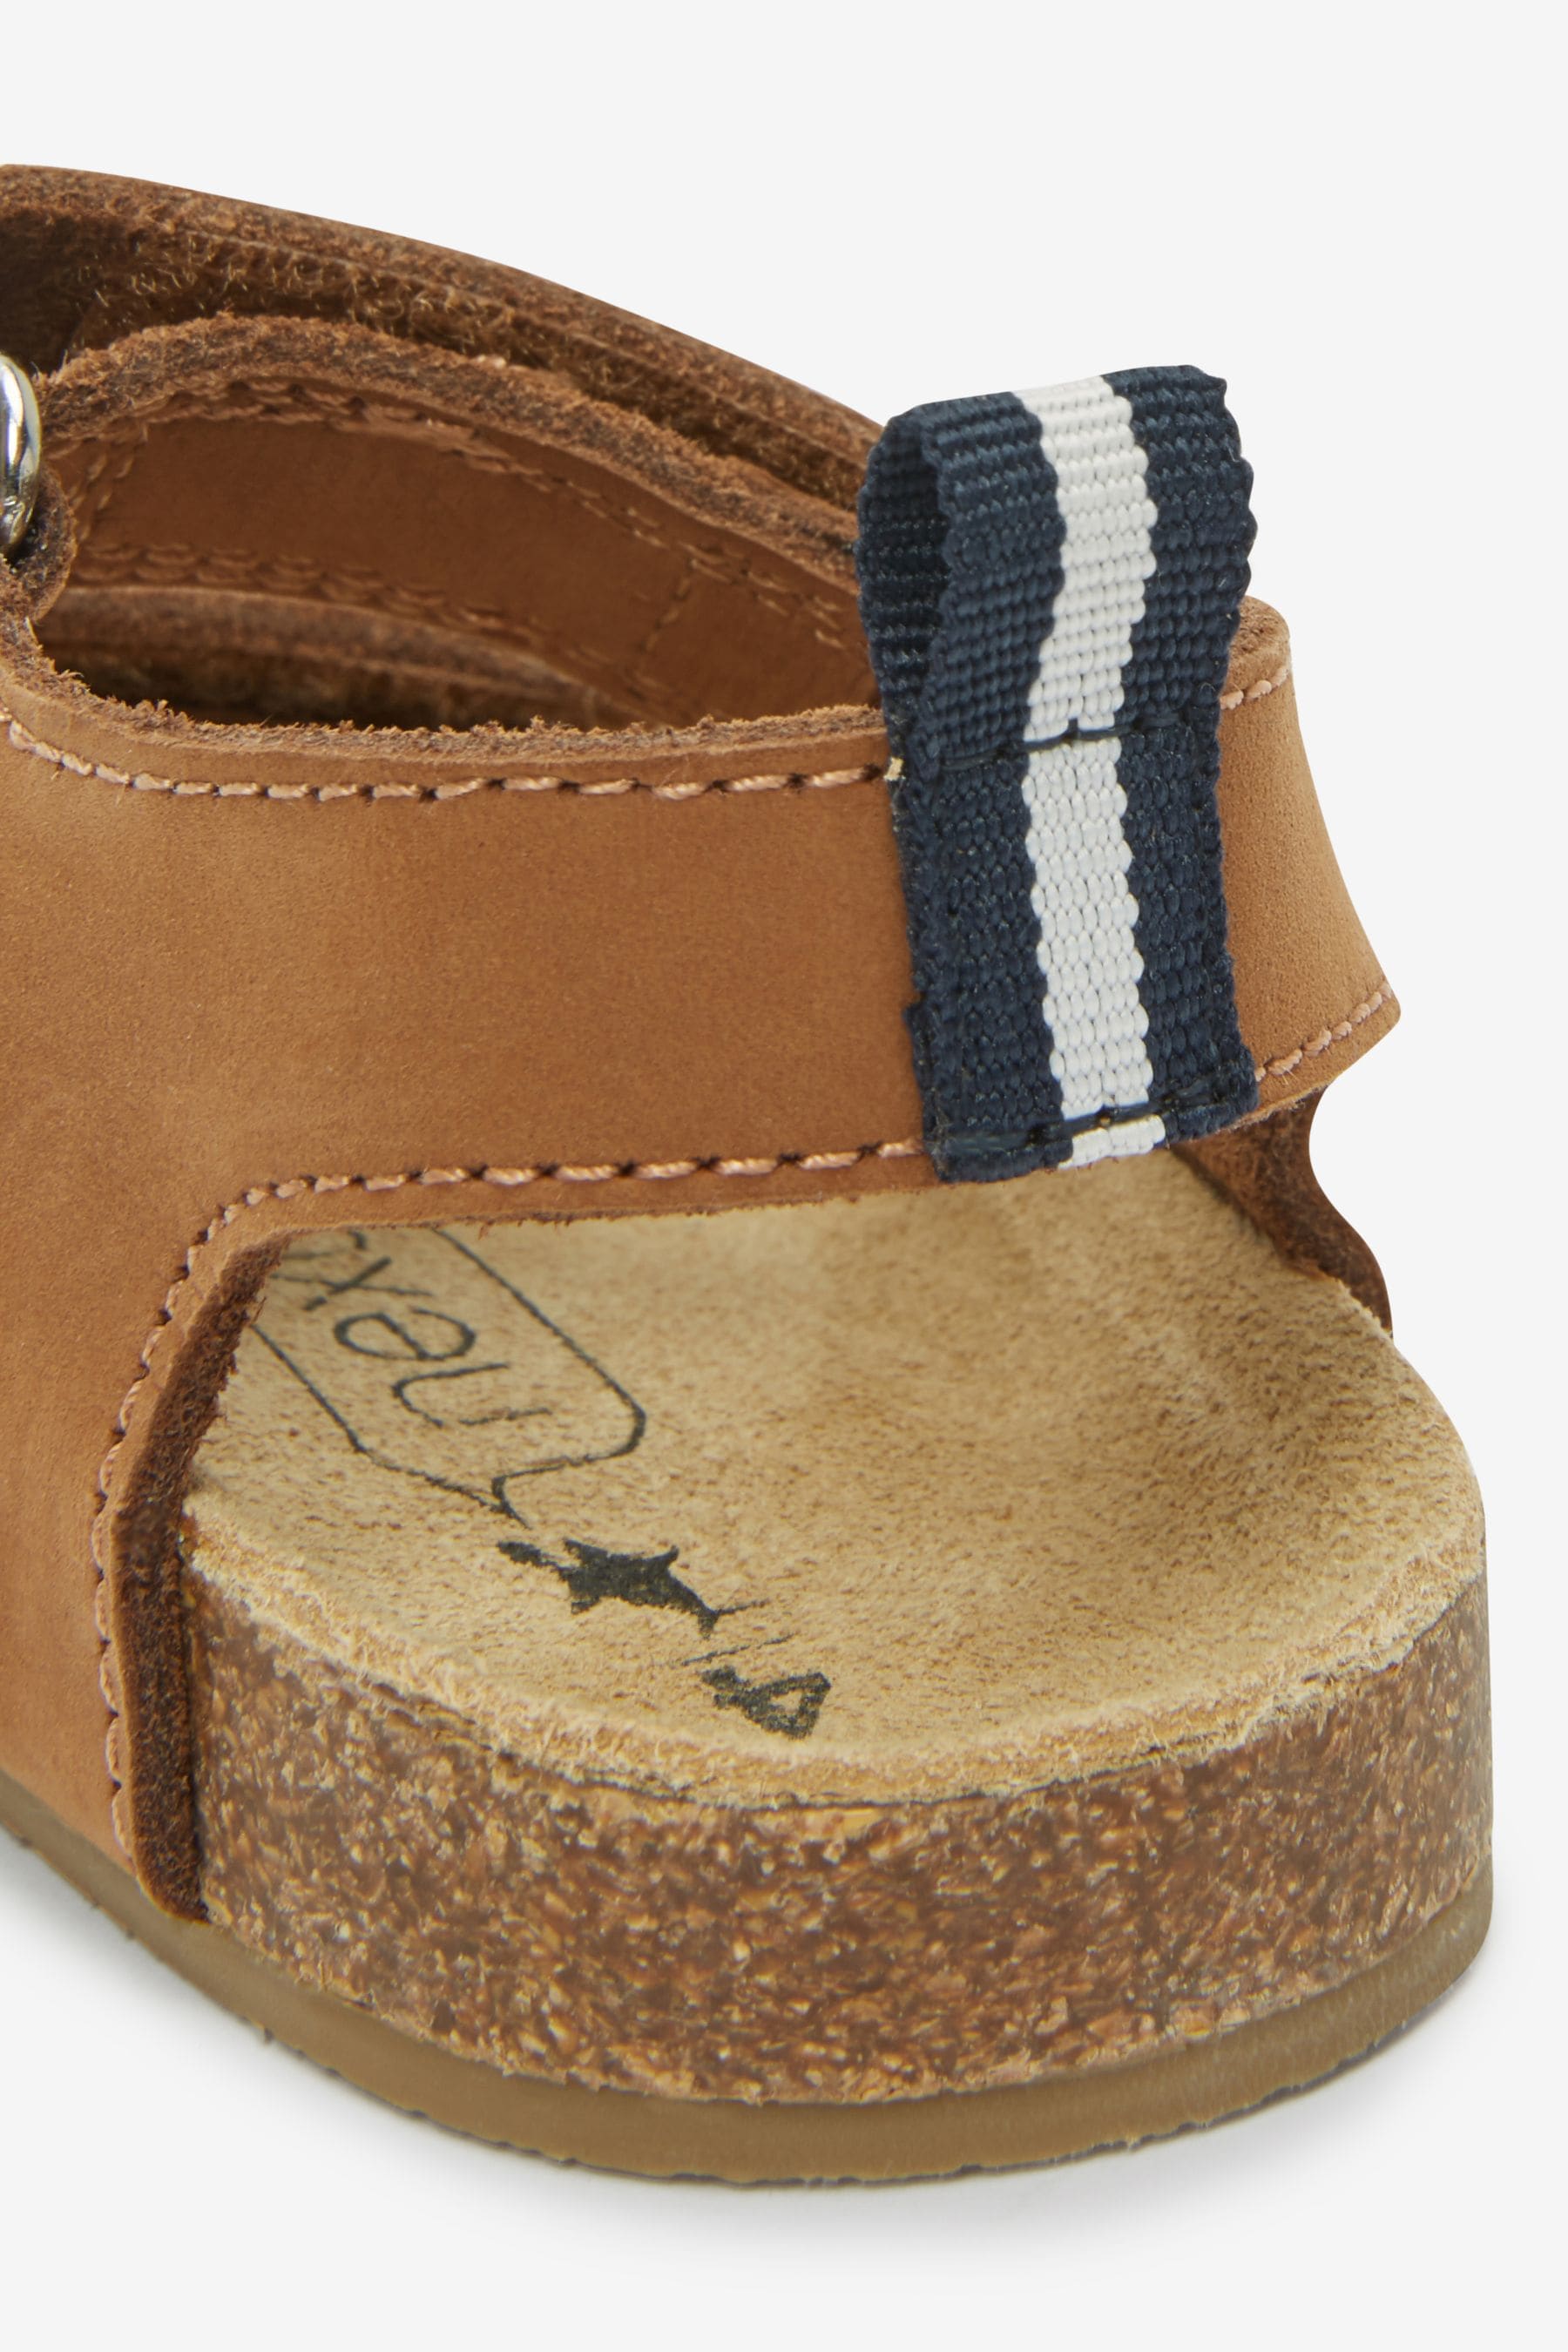 Tan Brown Corkbed Comfort Sandals